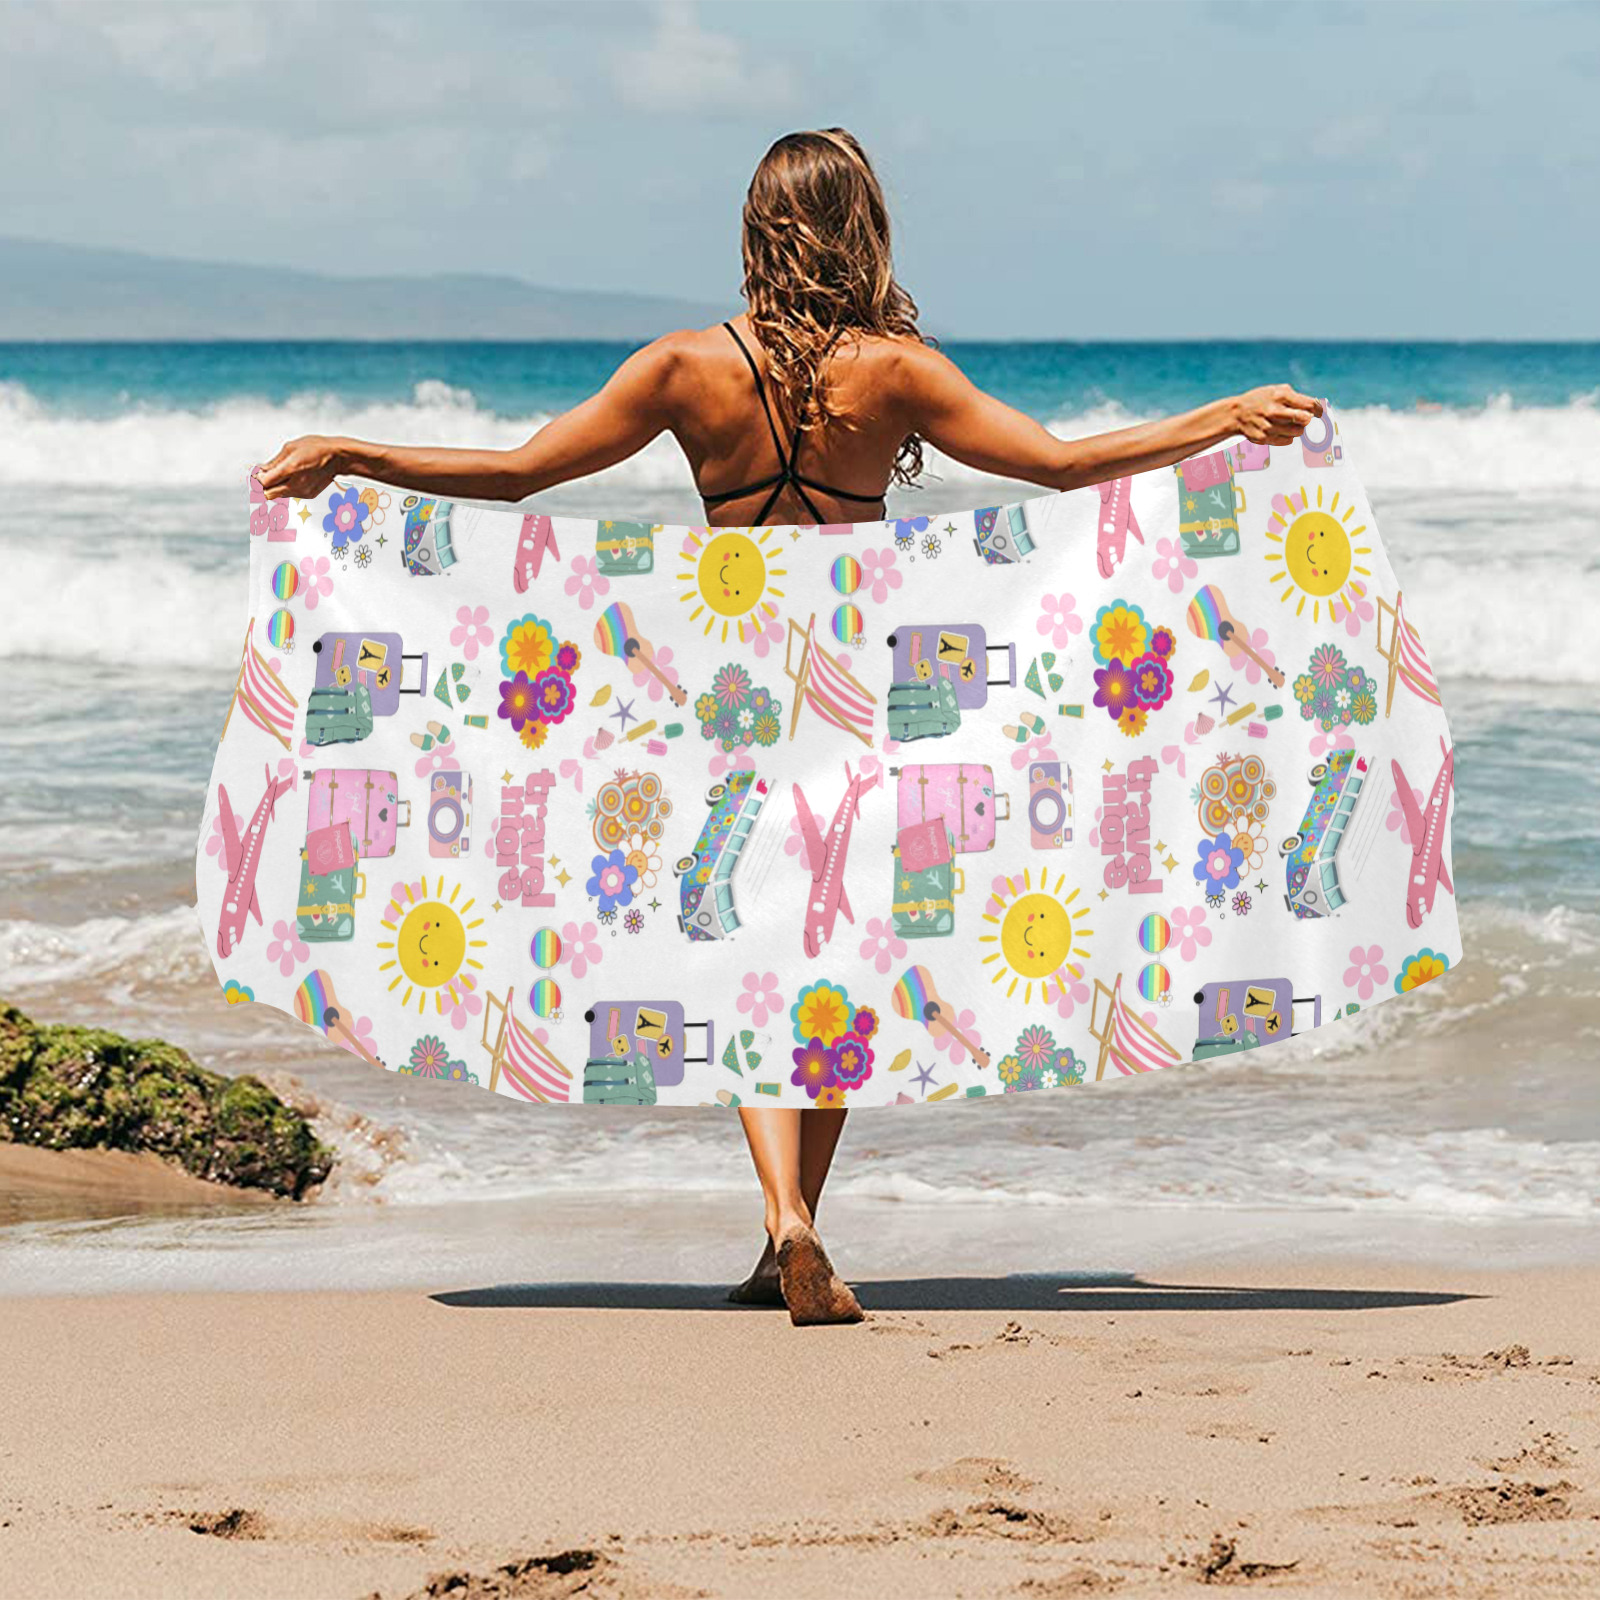 Hippie Summer Holiday Travel Vacation Artwork Design Beach Towel 32"x 71"